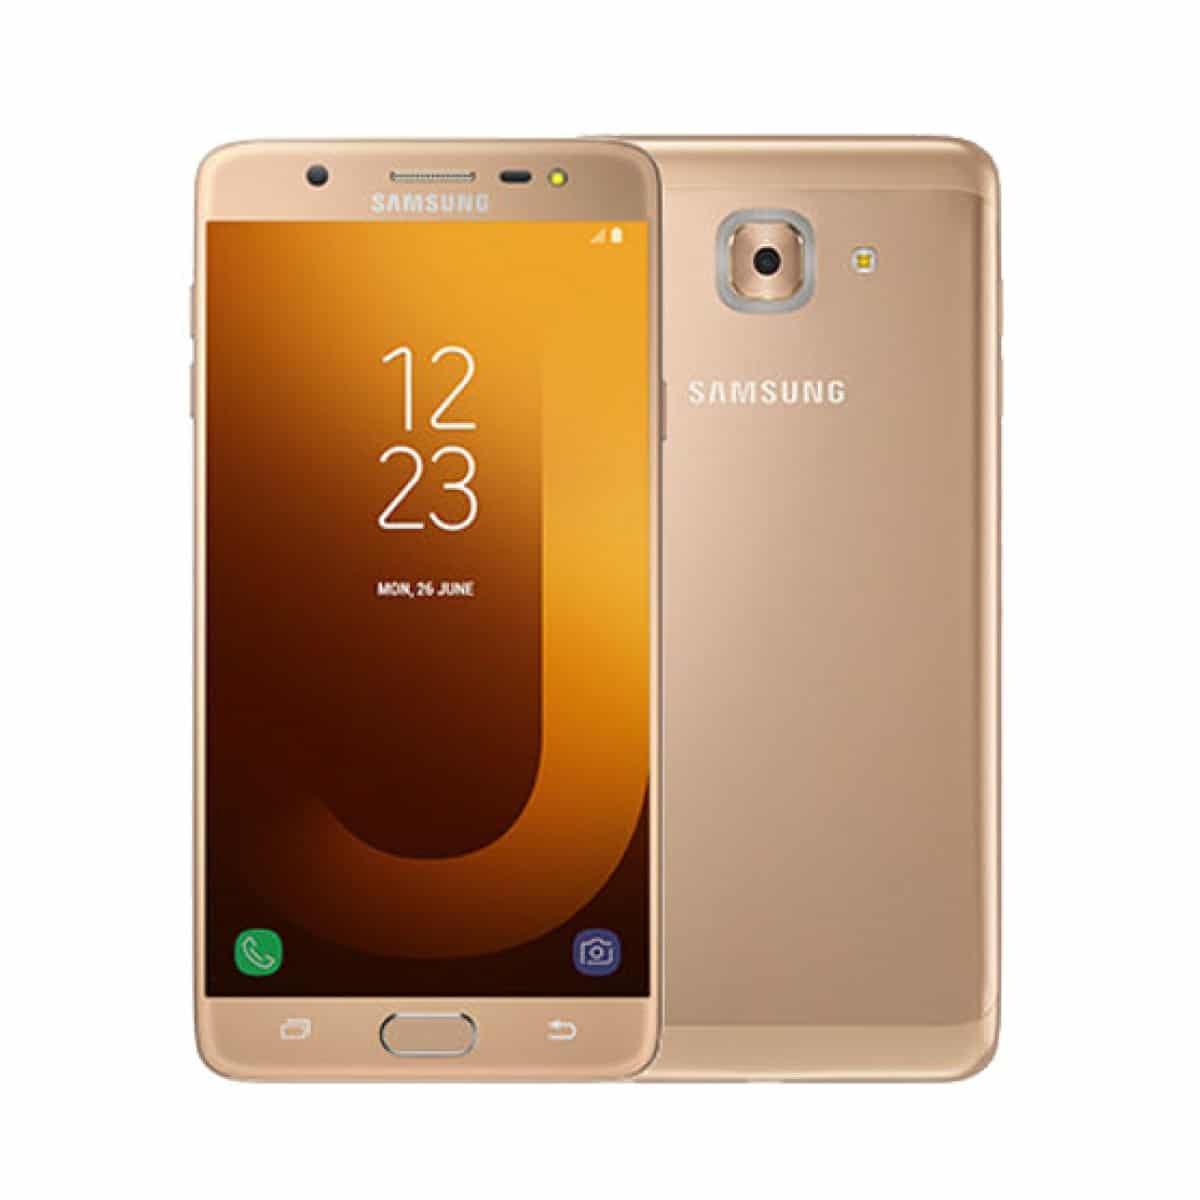 Samsung Galaxy J7 Max in Golden Color